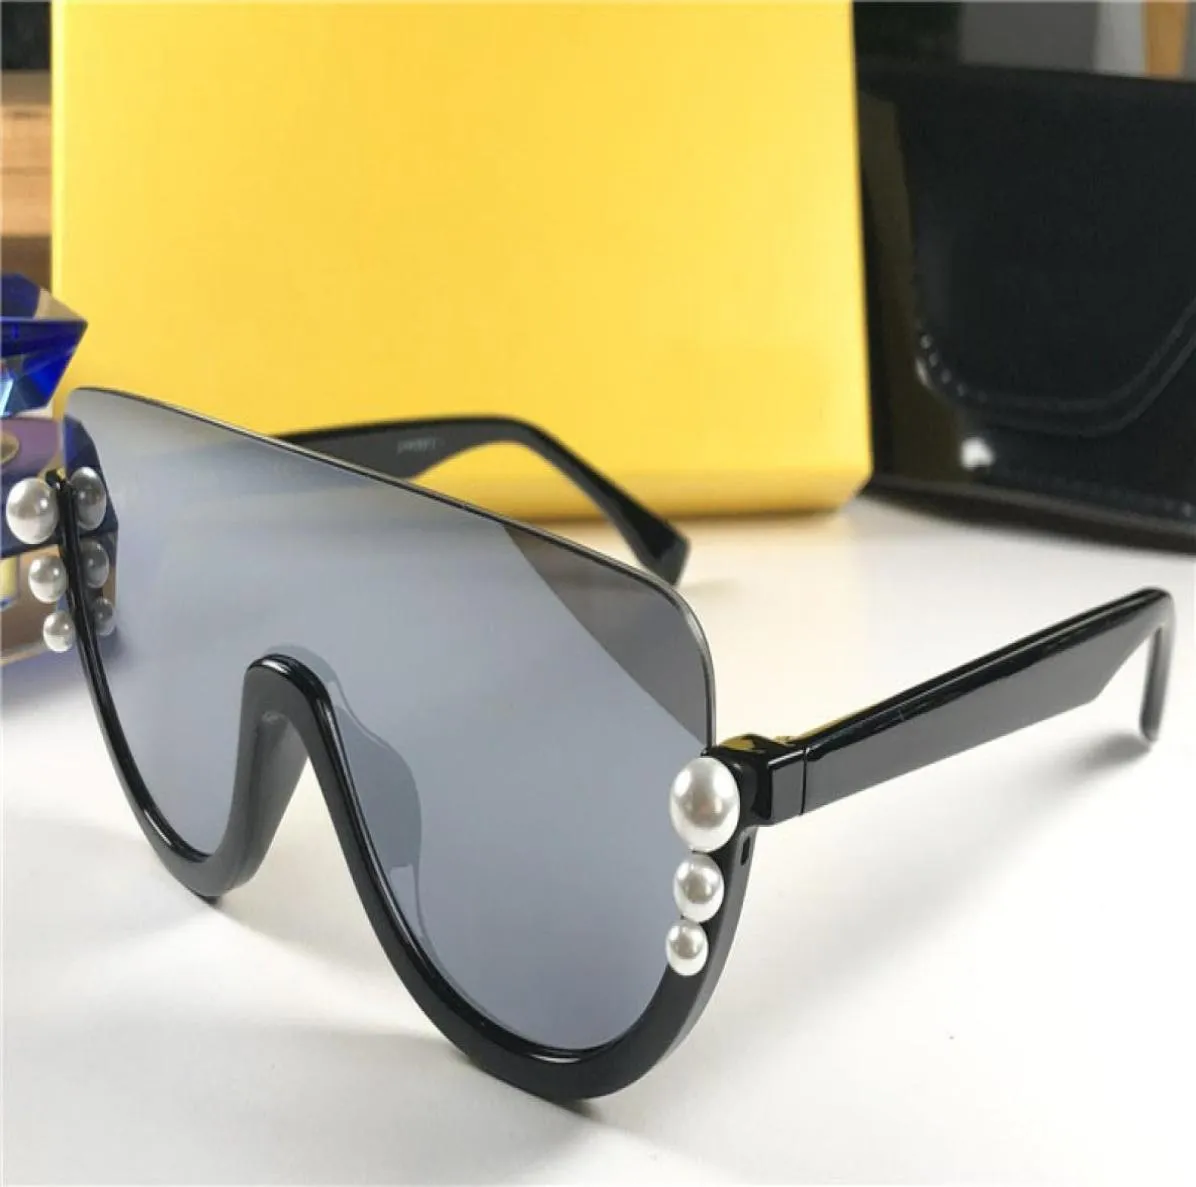 New fashion design women 0296 sunglasses square half frame pearls avantgarde popular style uv 400 protective glasses4399566